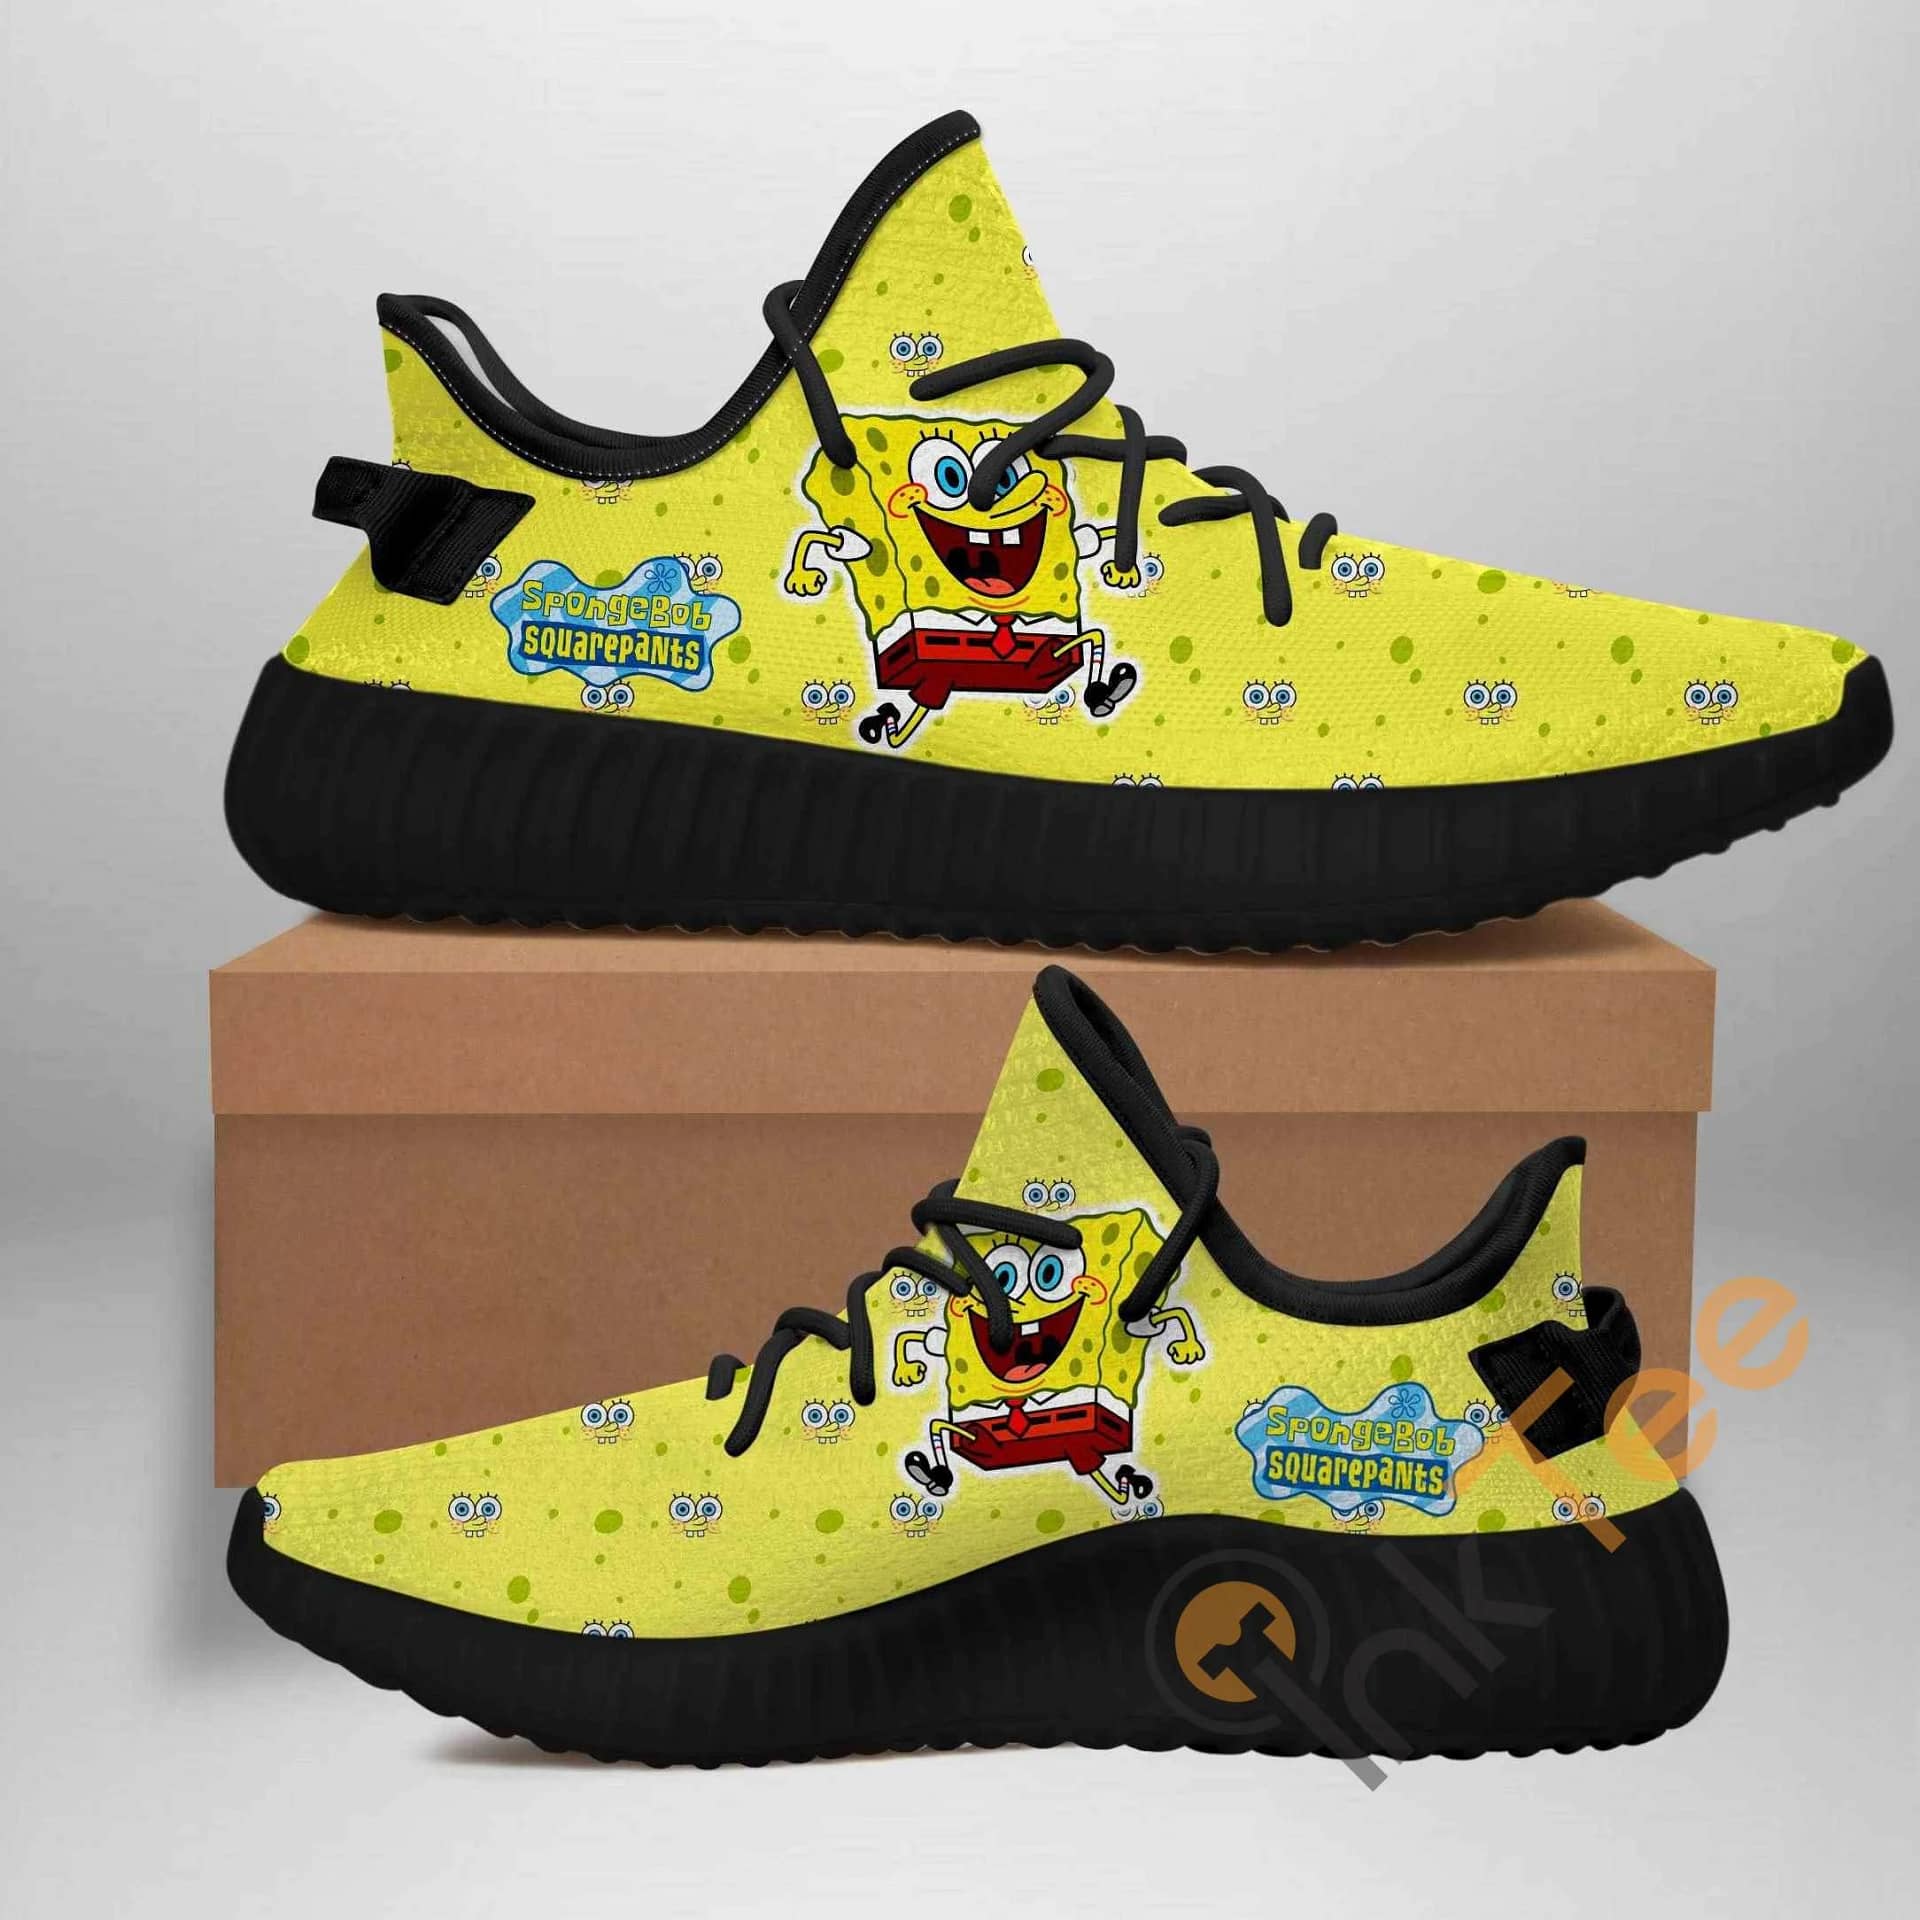 Spongebob Squarepants Amazon Best Selling Yeezy Boost